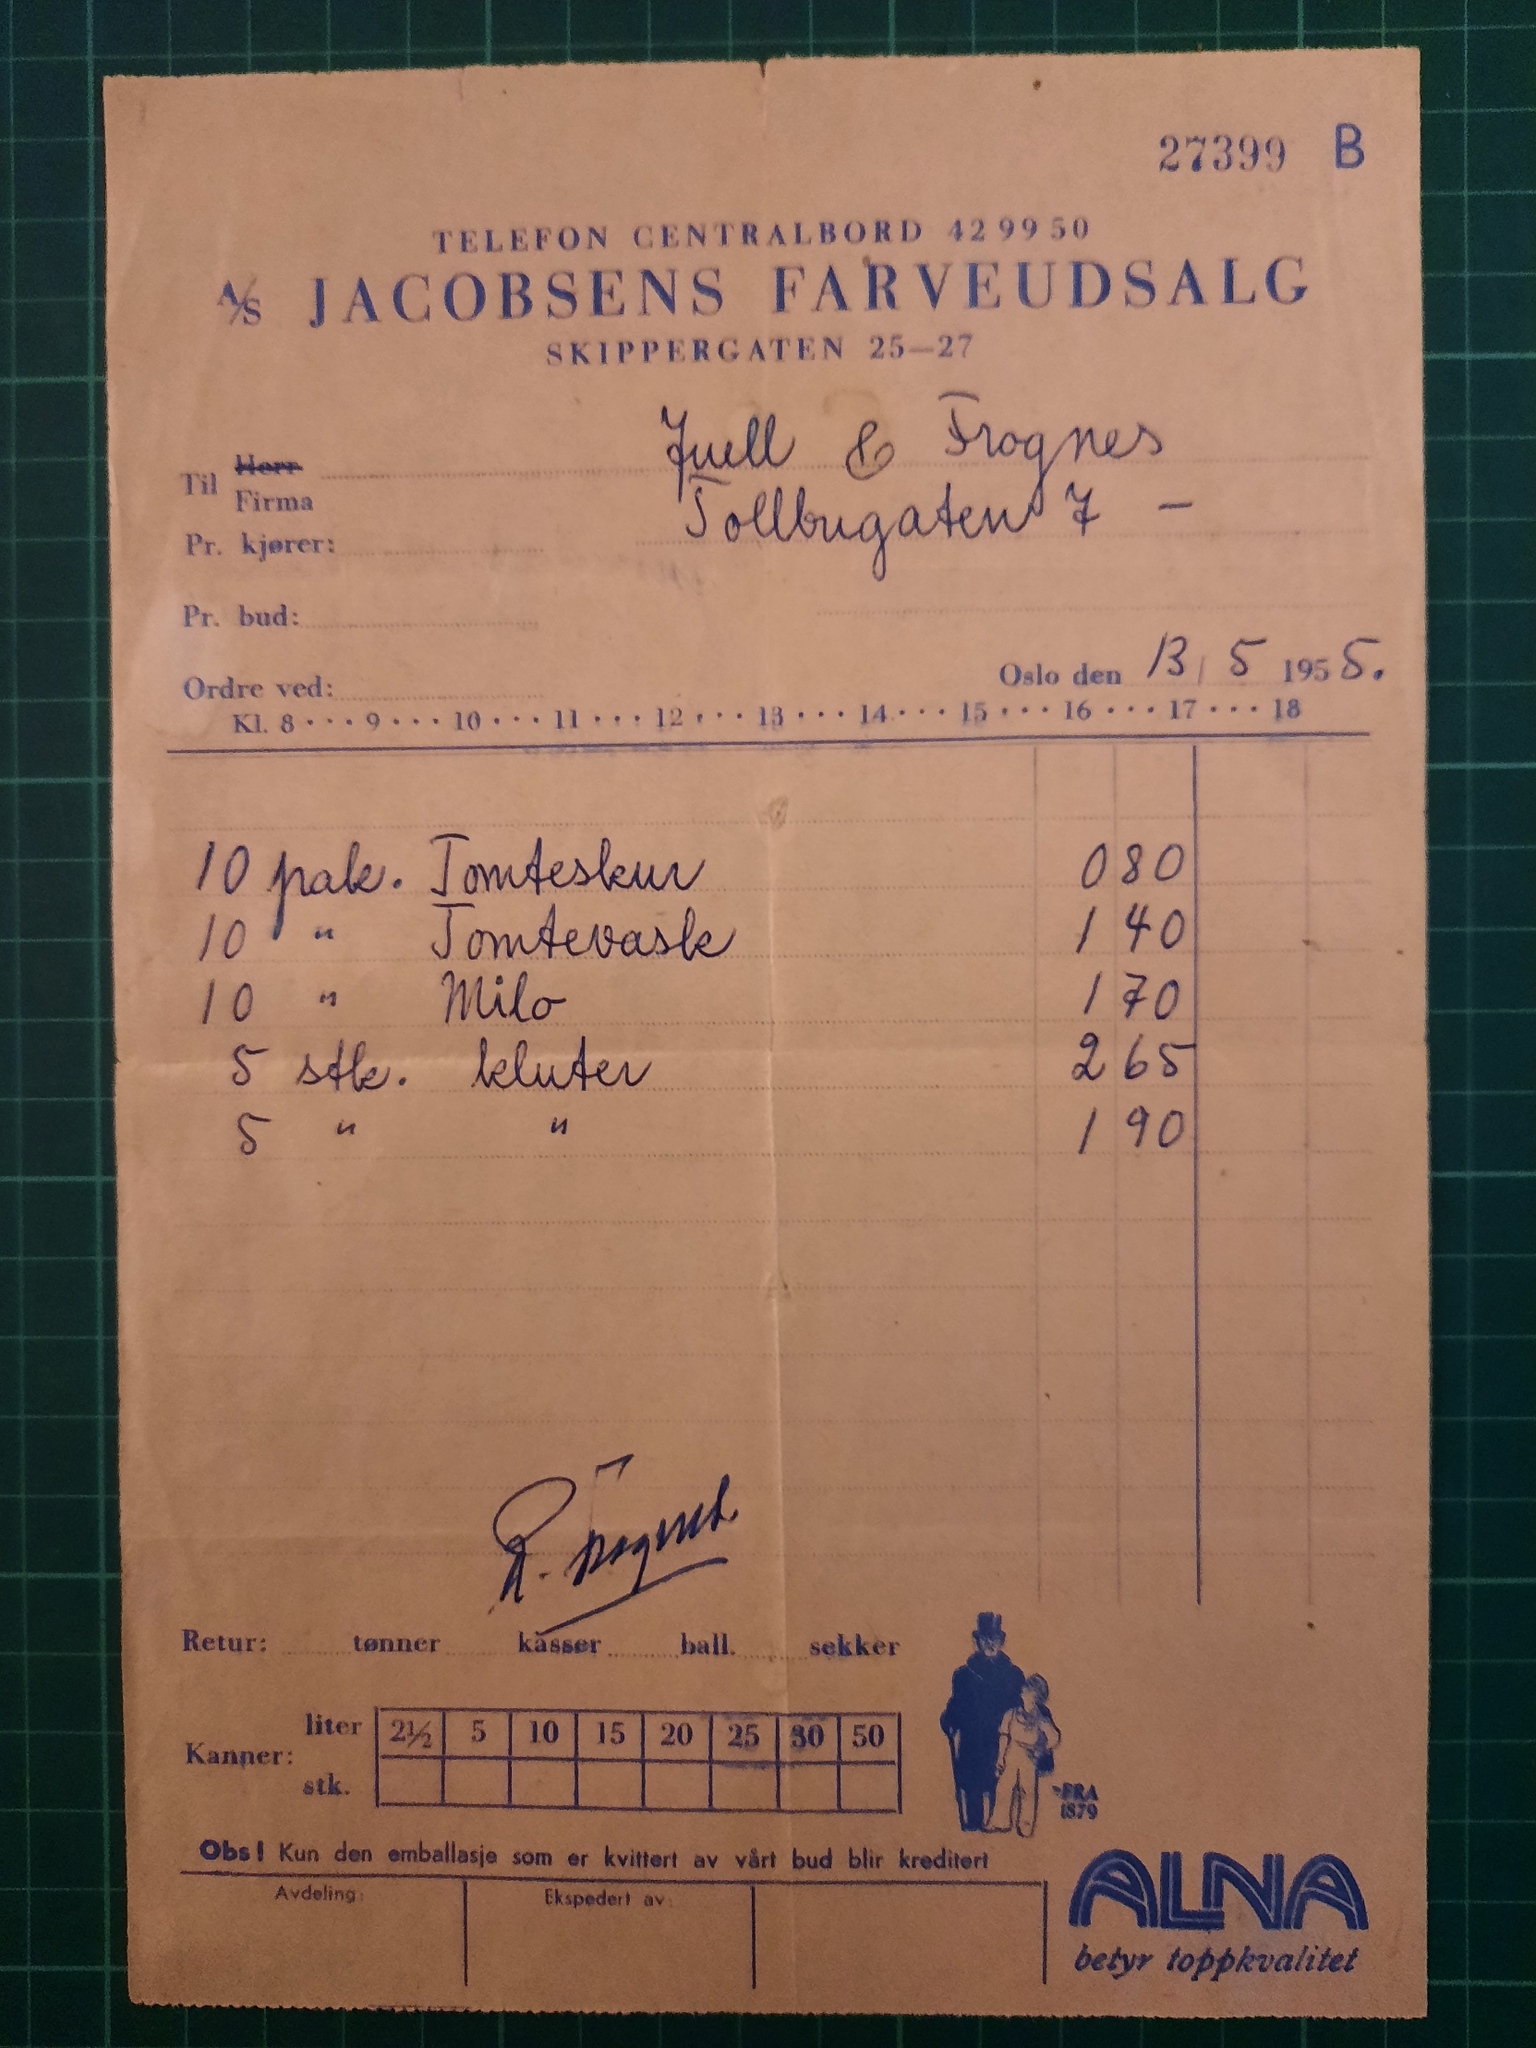 Faktura Jacobsen farveudsalg 1955